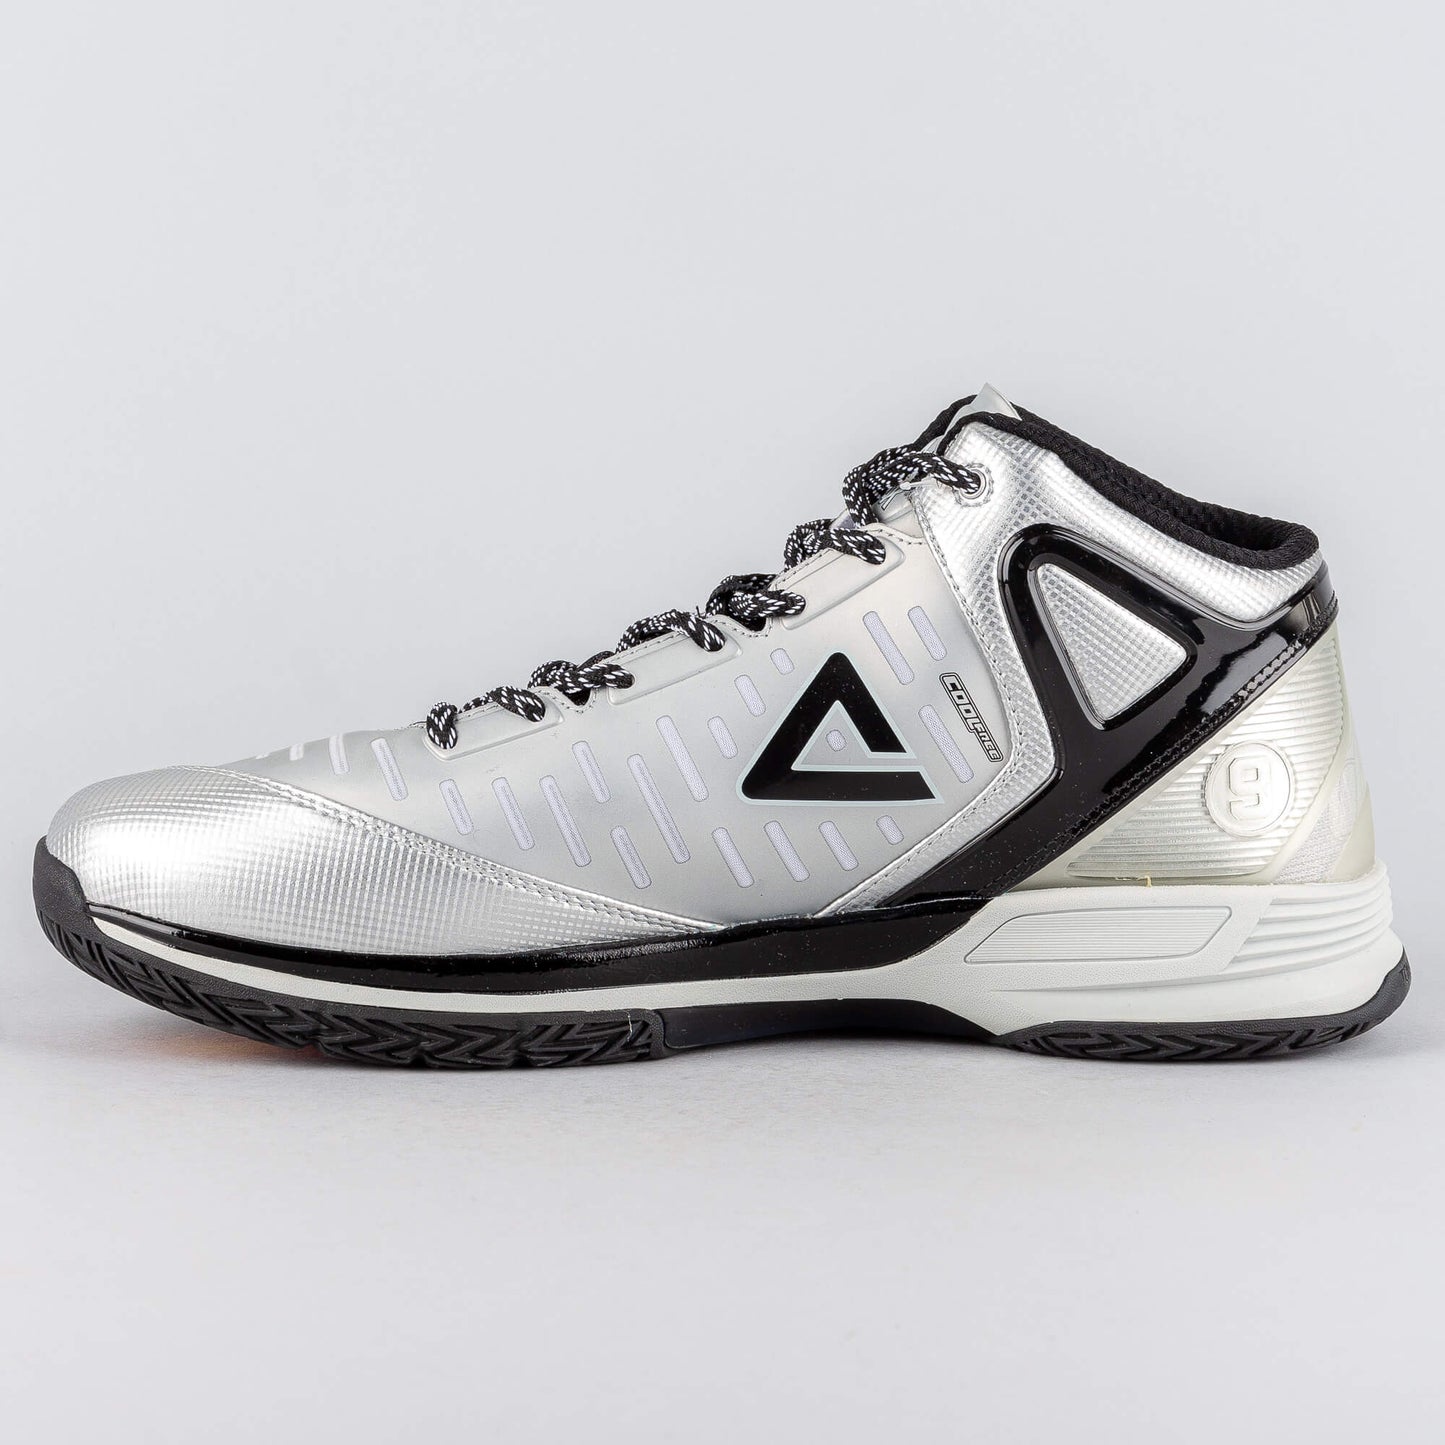 PEAK TP9-II Basketball Shoes Silver/Black